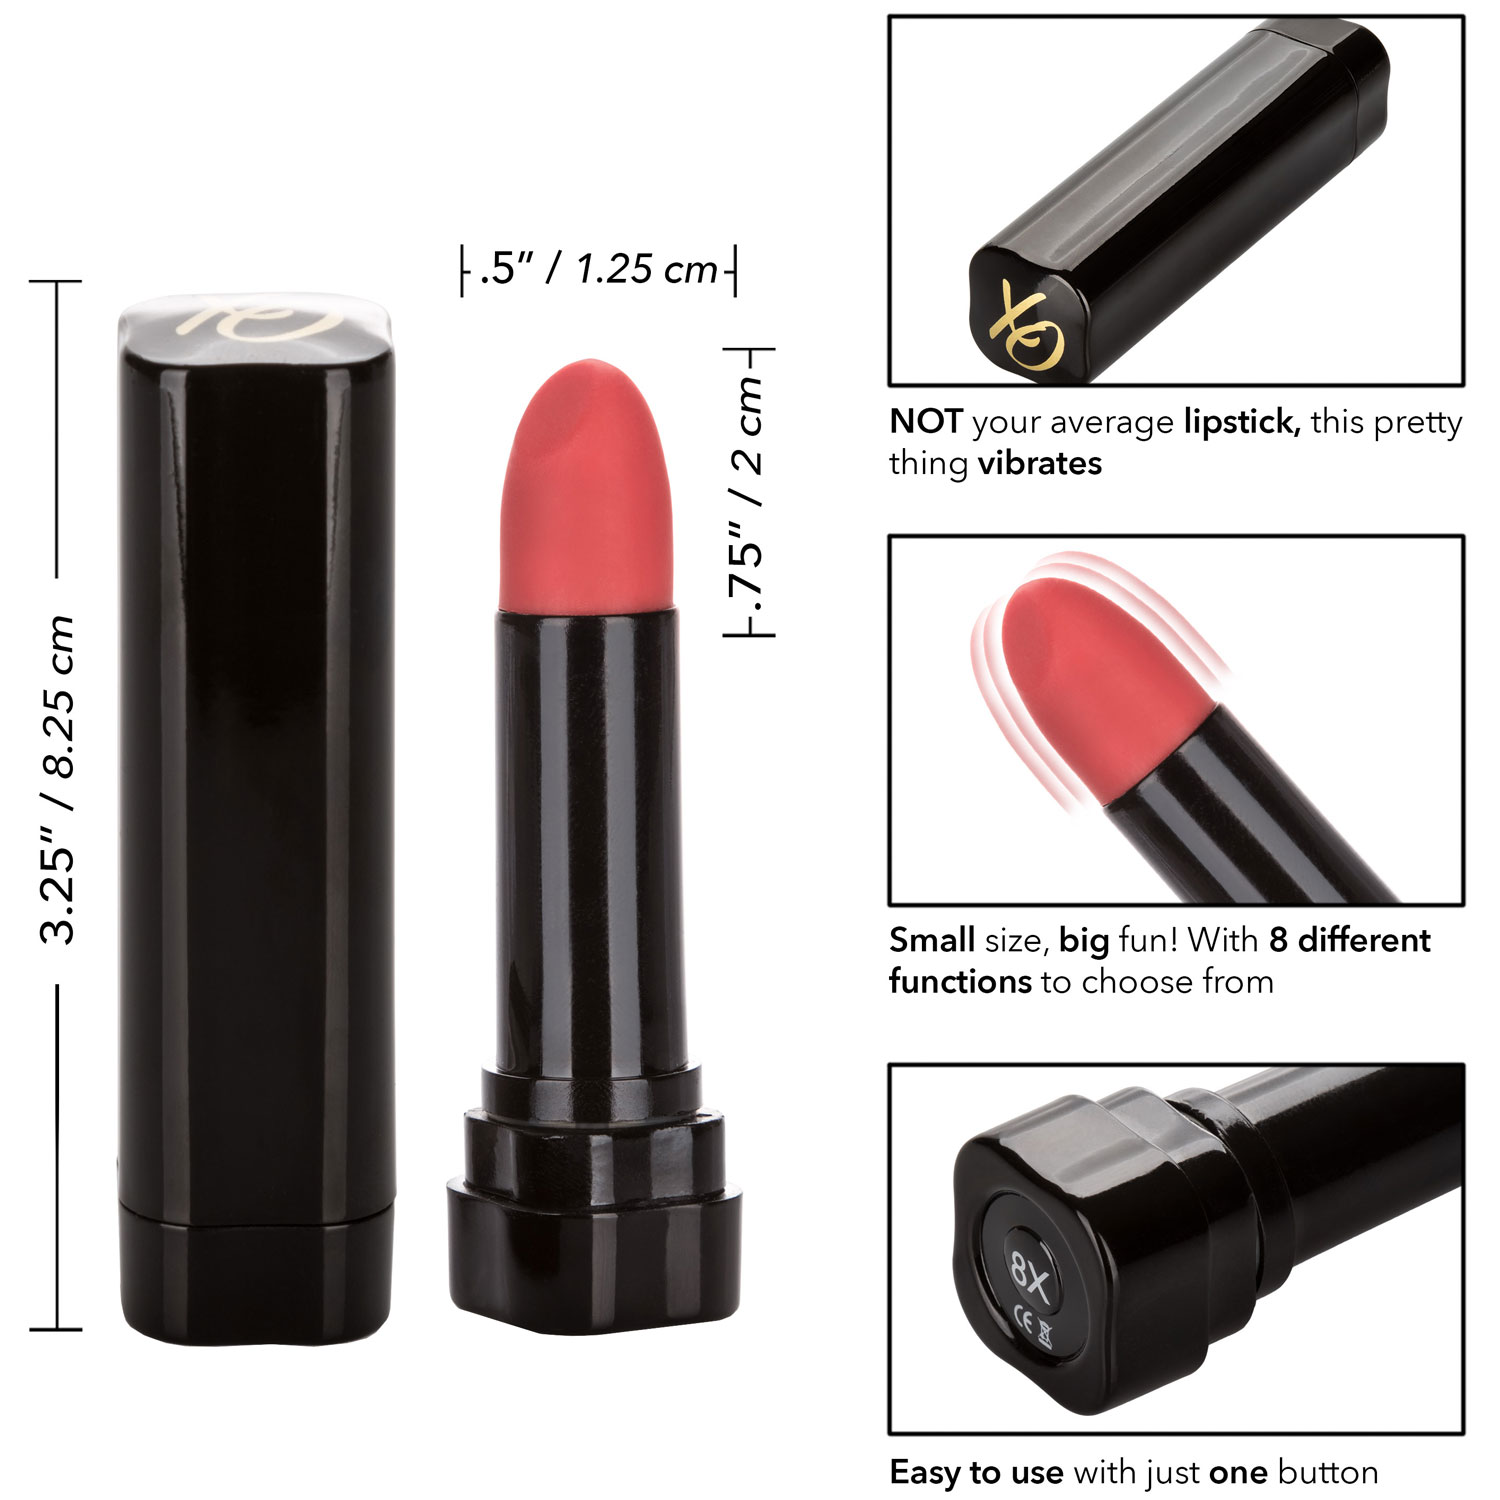 Hide & Play Lipstick Vibrator by CalExotics - Measurements